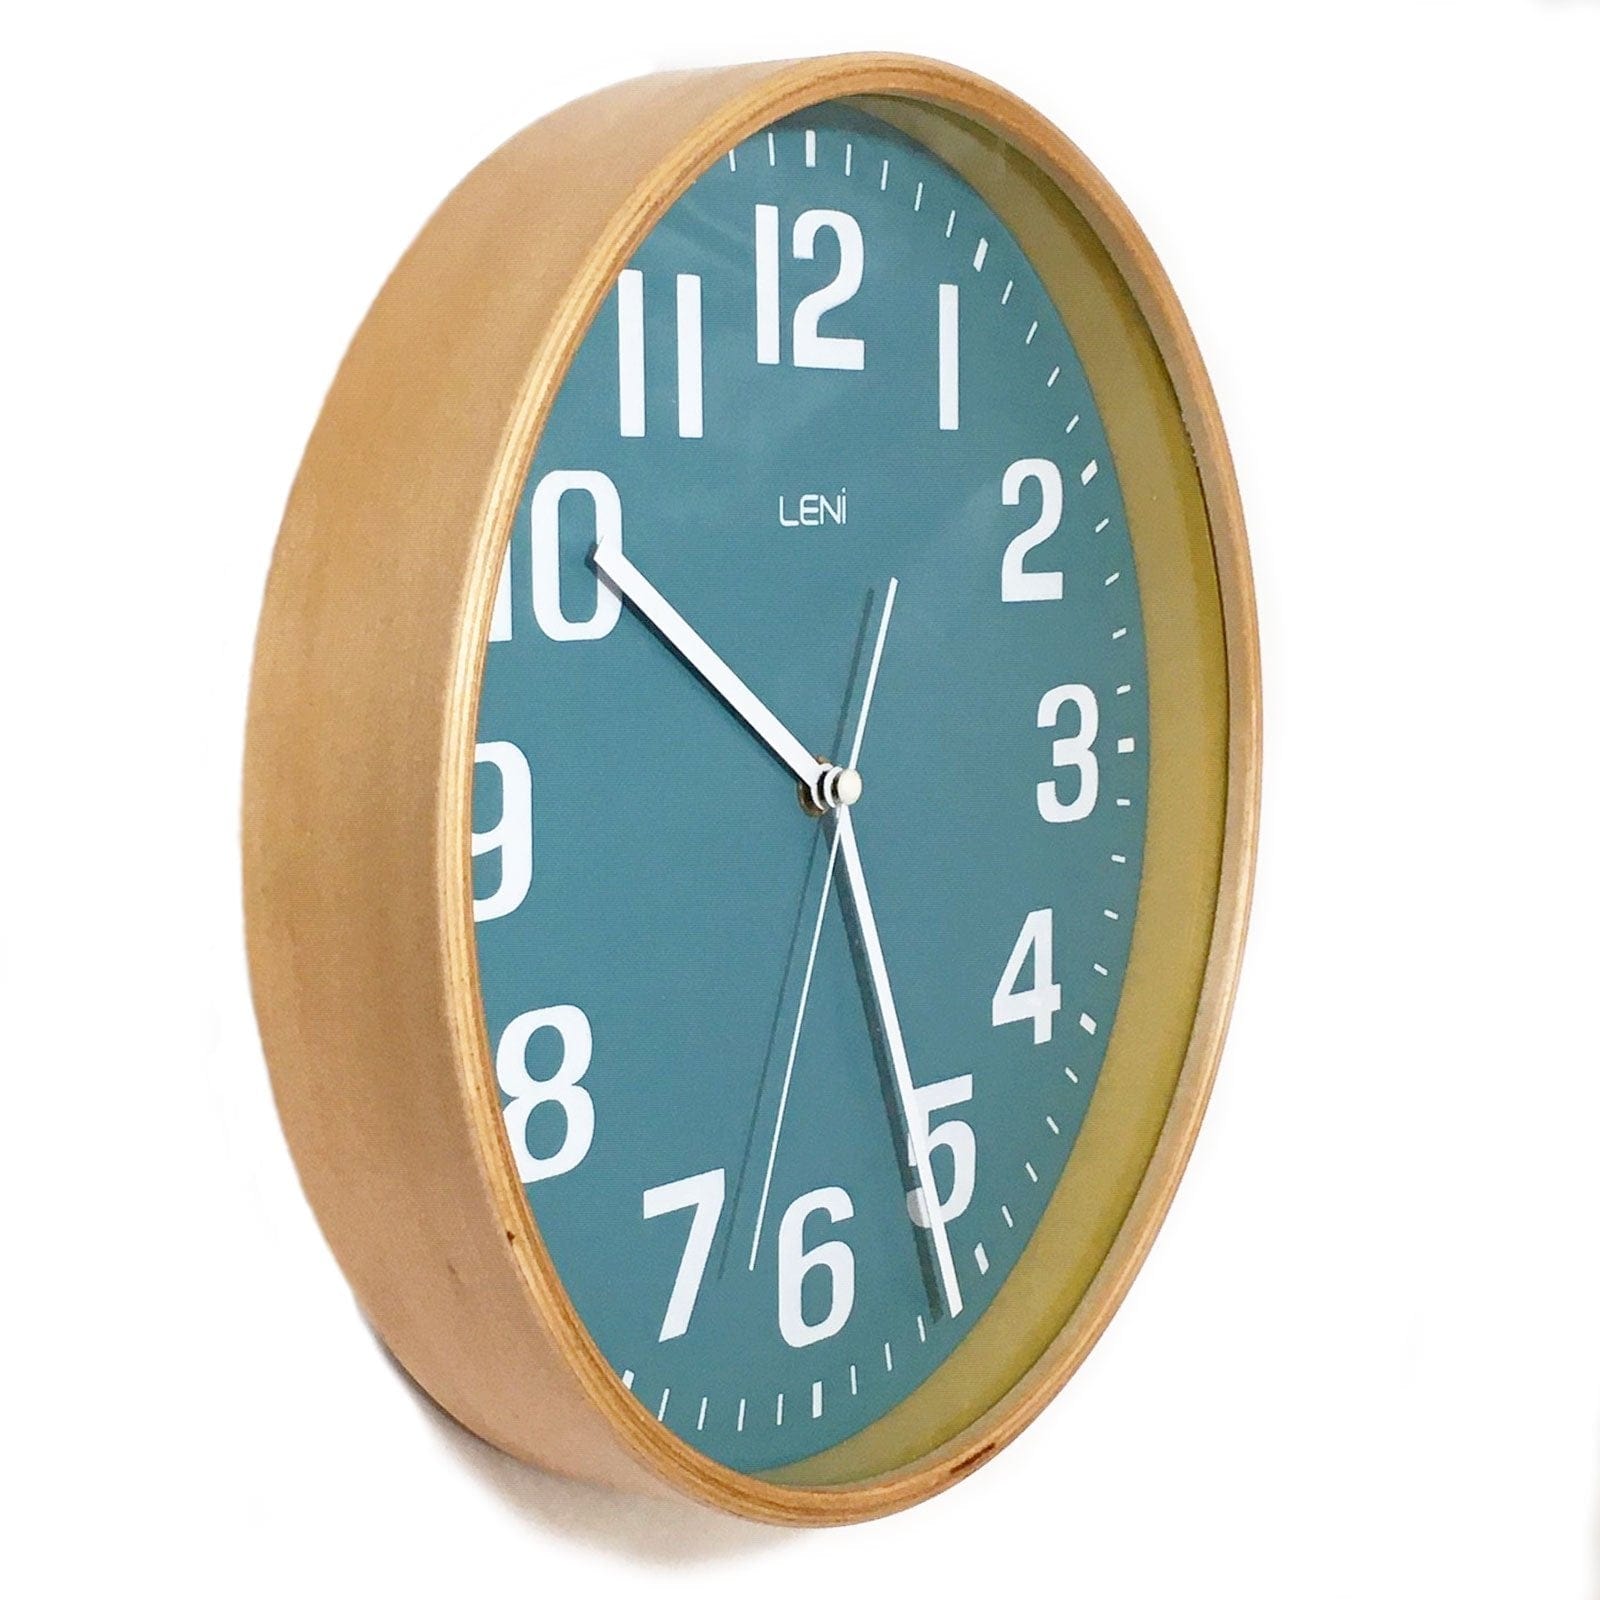 28cm Leni Wood Wall Clock - Teal.